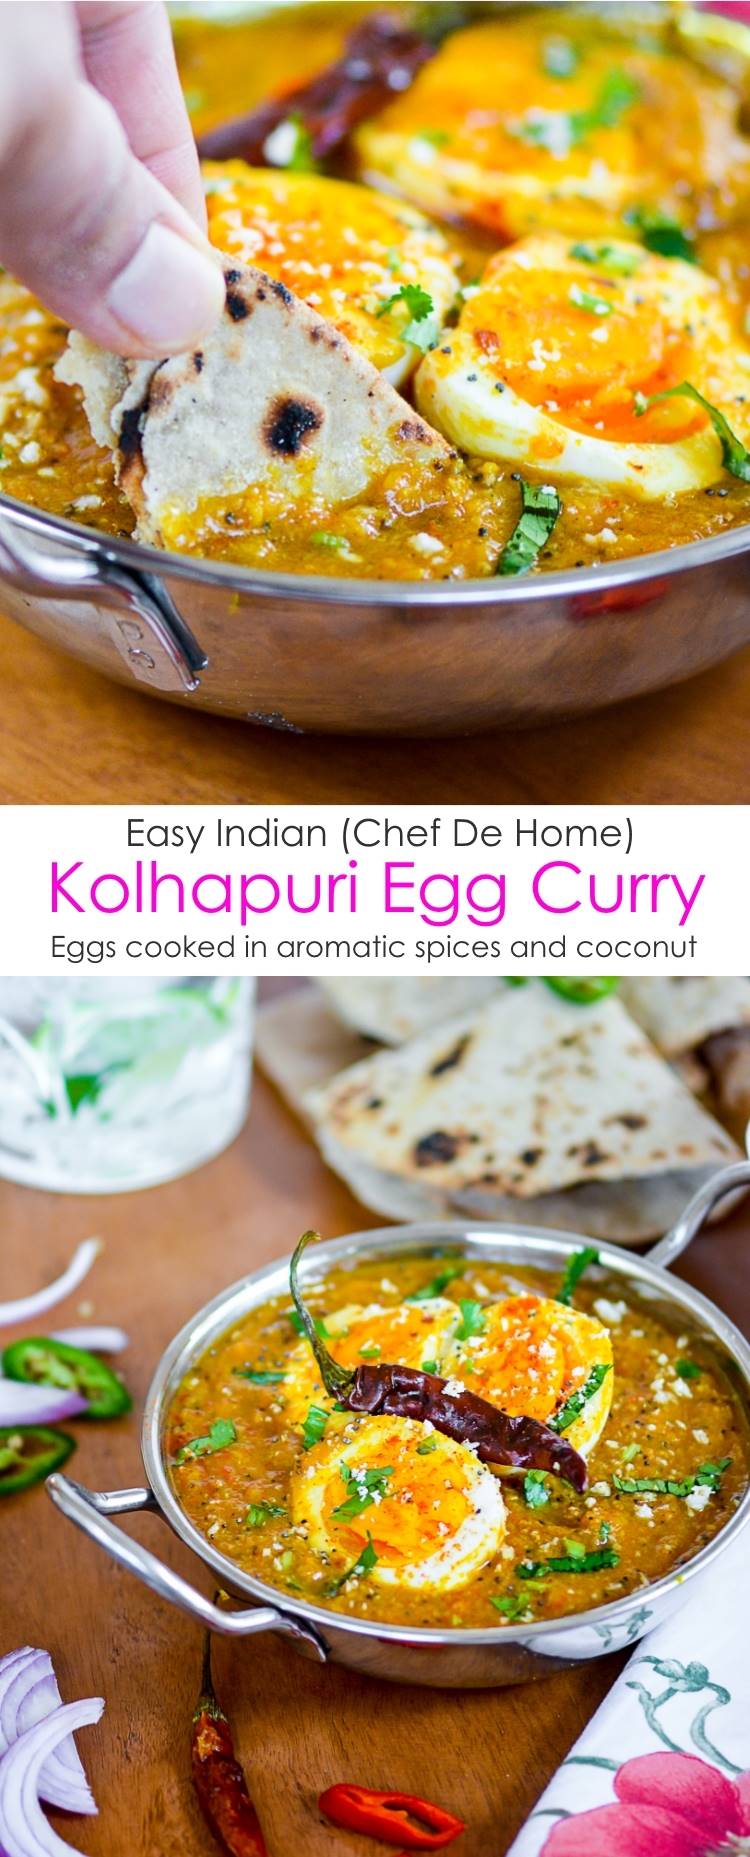 Easy Indian Kolhapuri Egg Curry Recipe Chefdehome Com